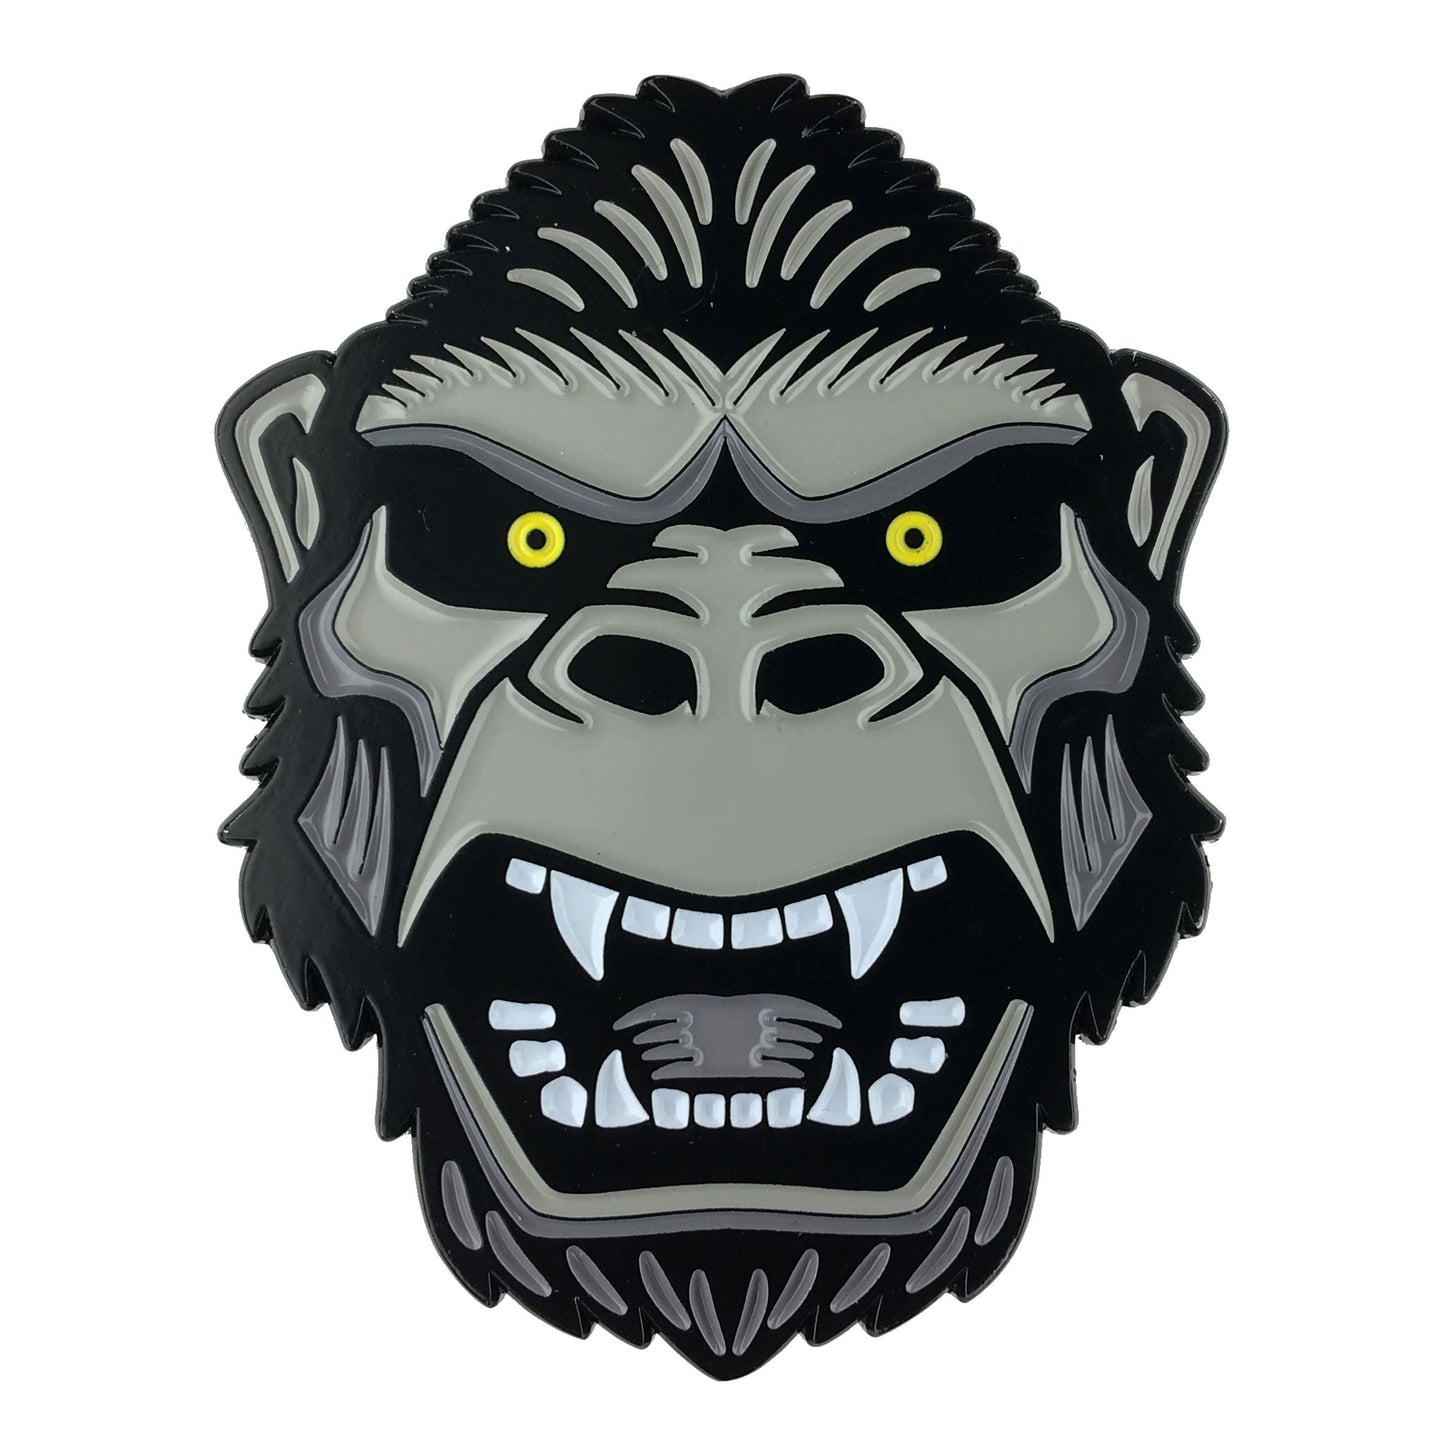 King Kong gorilla horror monster head enamel pin by Monsterologist